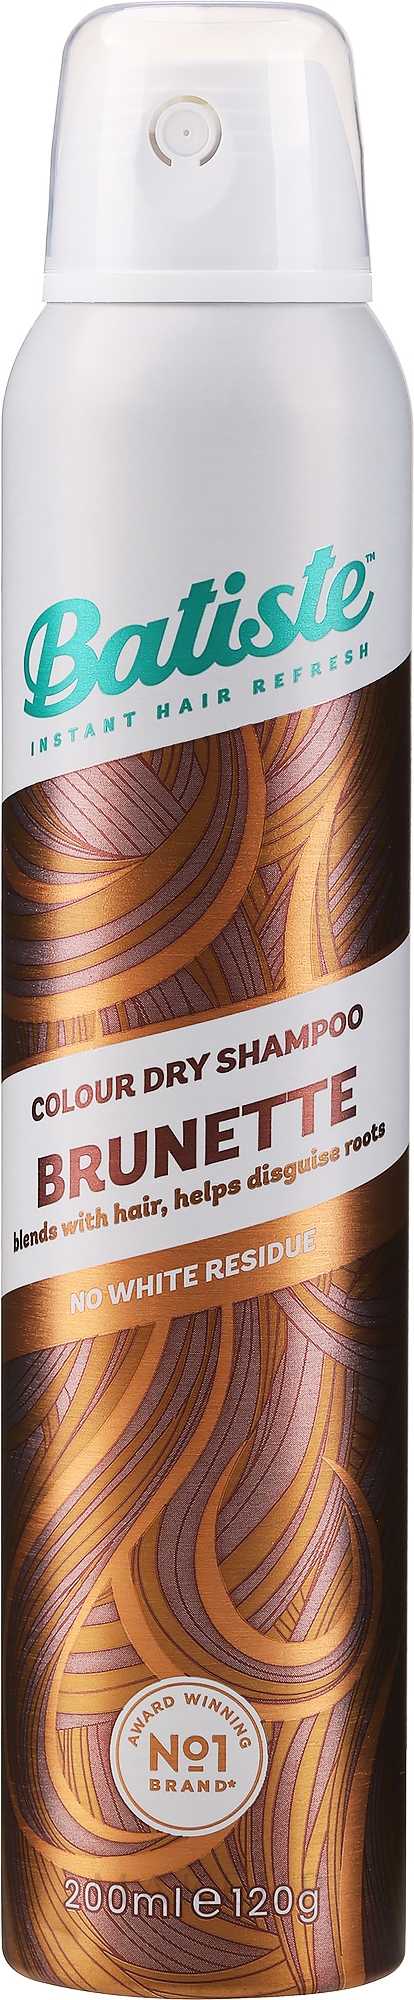 Trockenes Shampoo - Batiste Dry Shampoo Medium and Brunette a Hint of Colour — Bild 200 ml